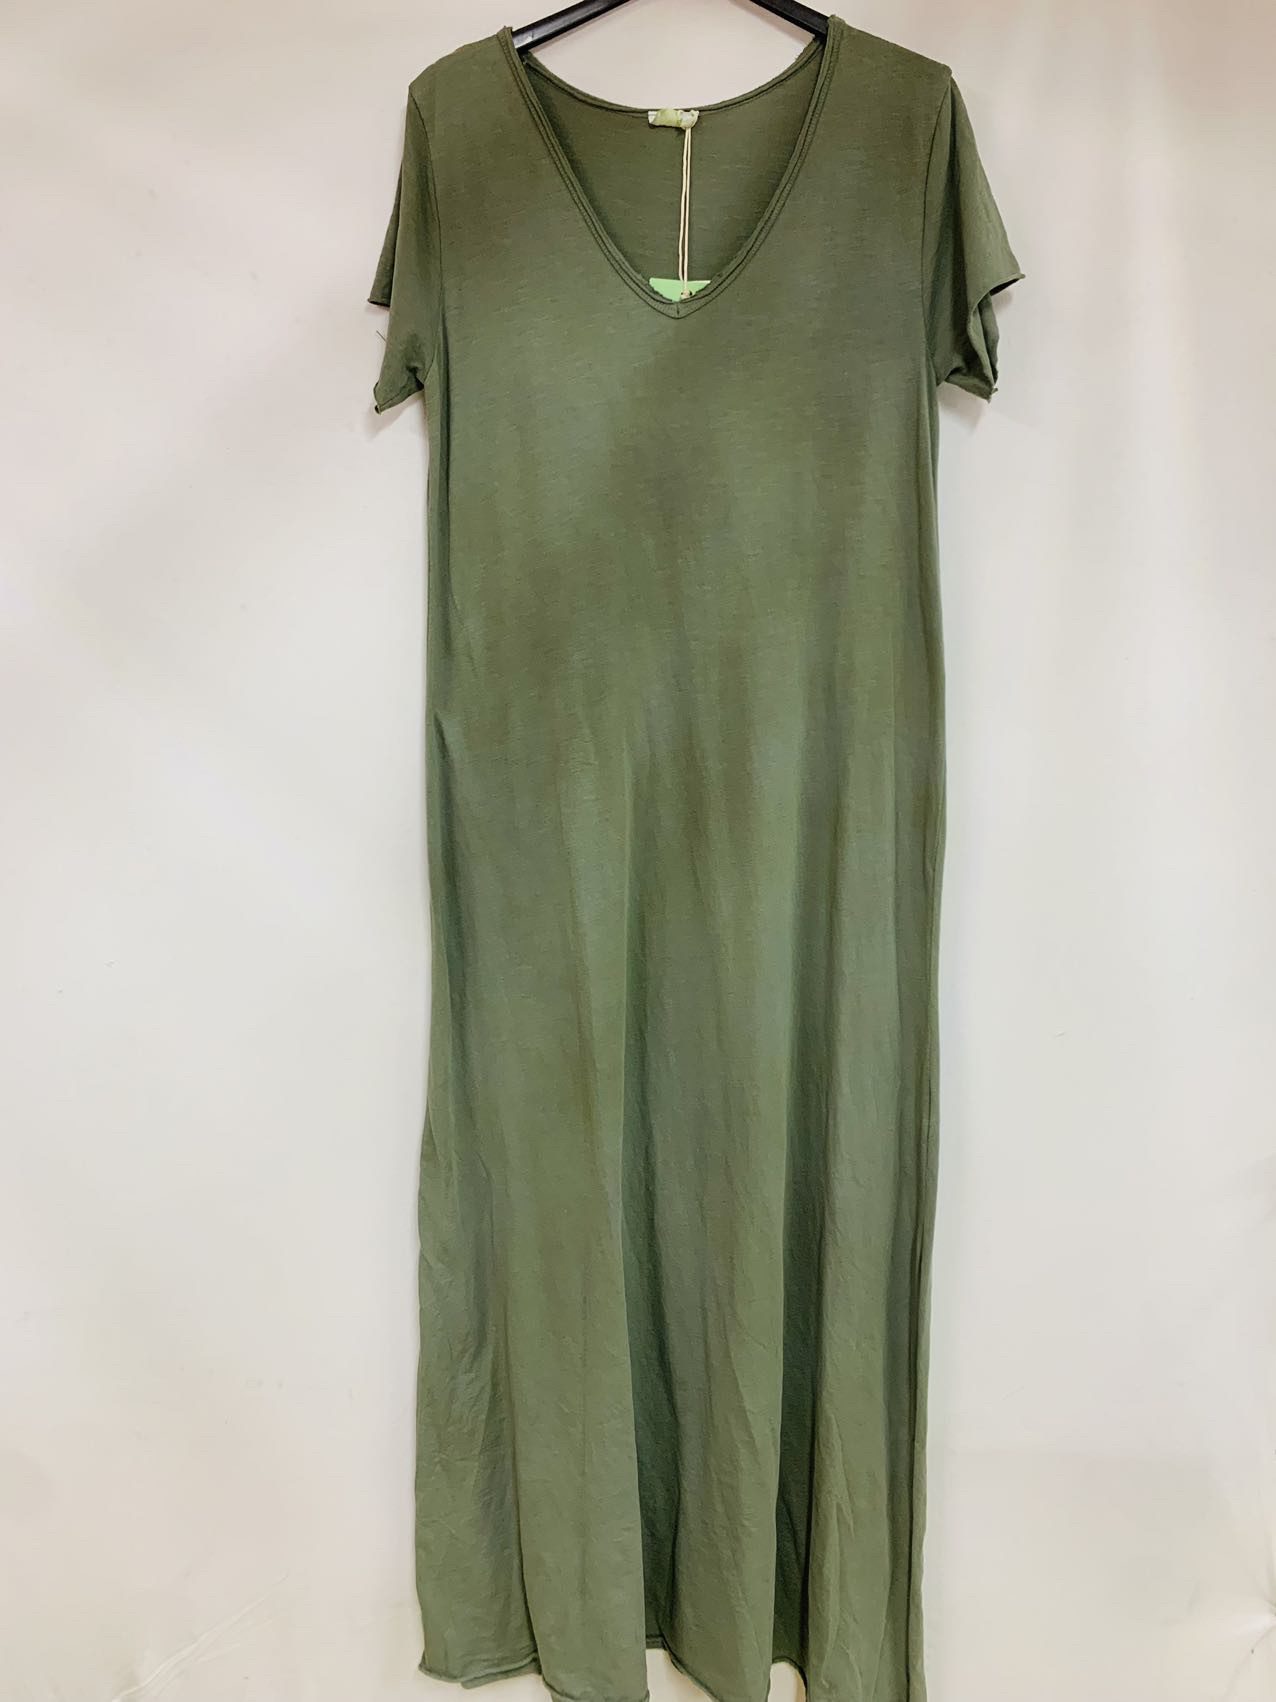 Katoenen maxi jurk met spilt - Franse mode vintage jurk - kleur MILITAIR GROEN - maat 38/40